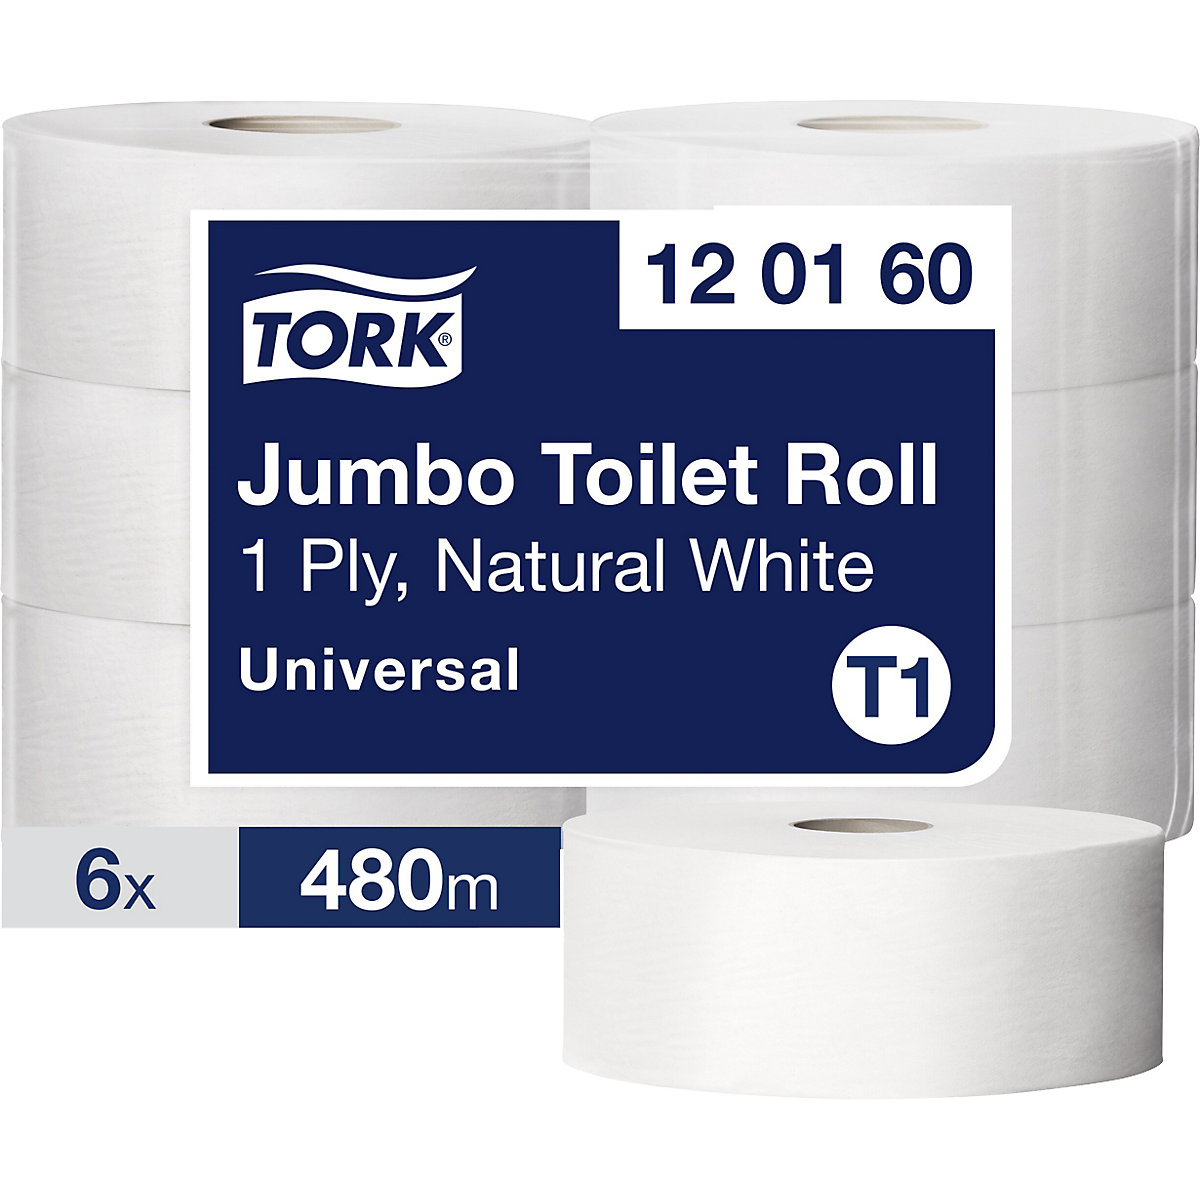 Papel higiénico Jumbo, rollo industrial – TORK (Imagen del producto 3)-2